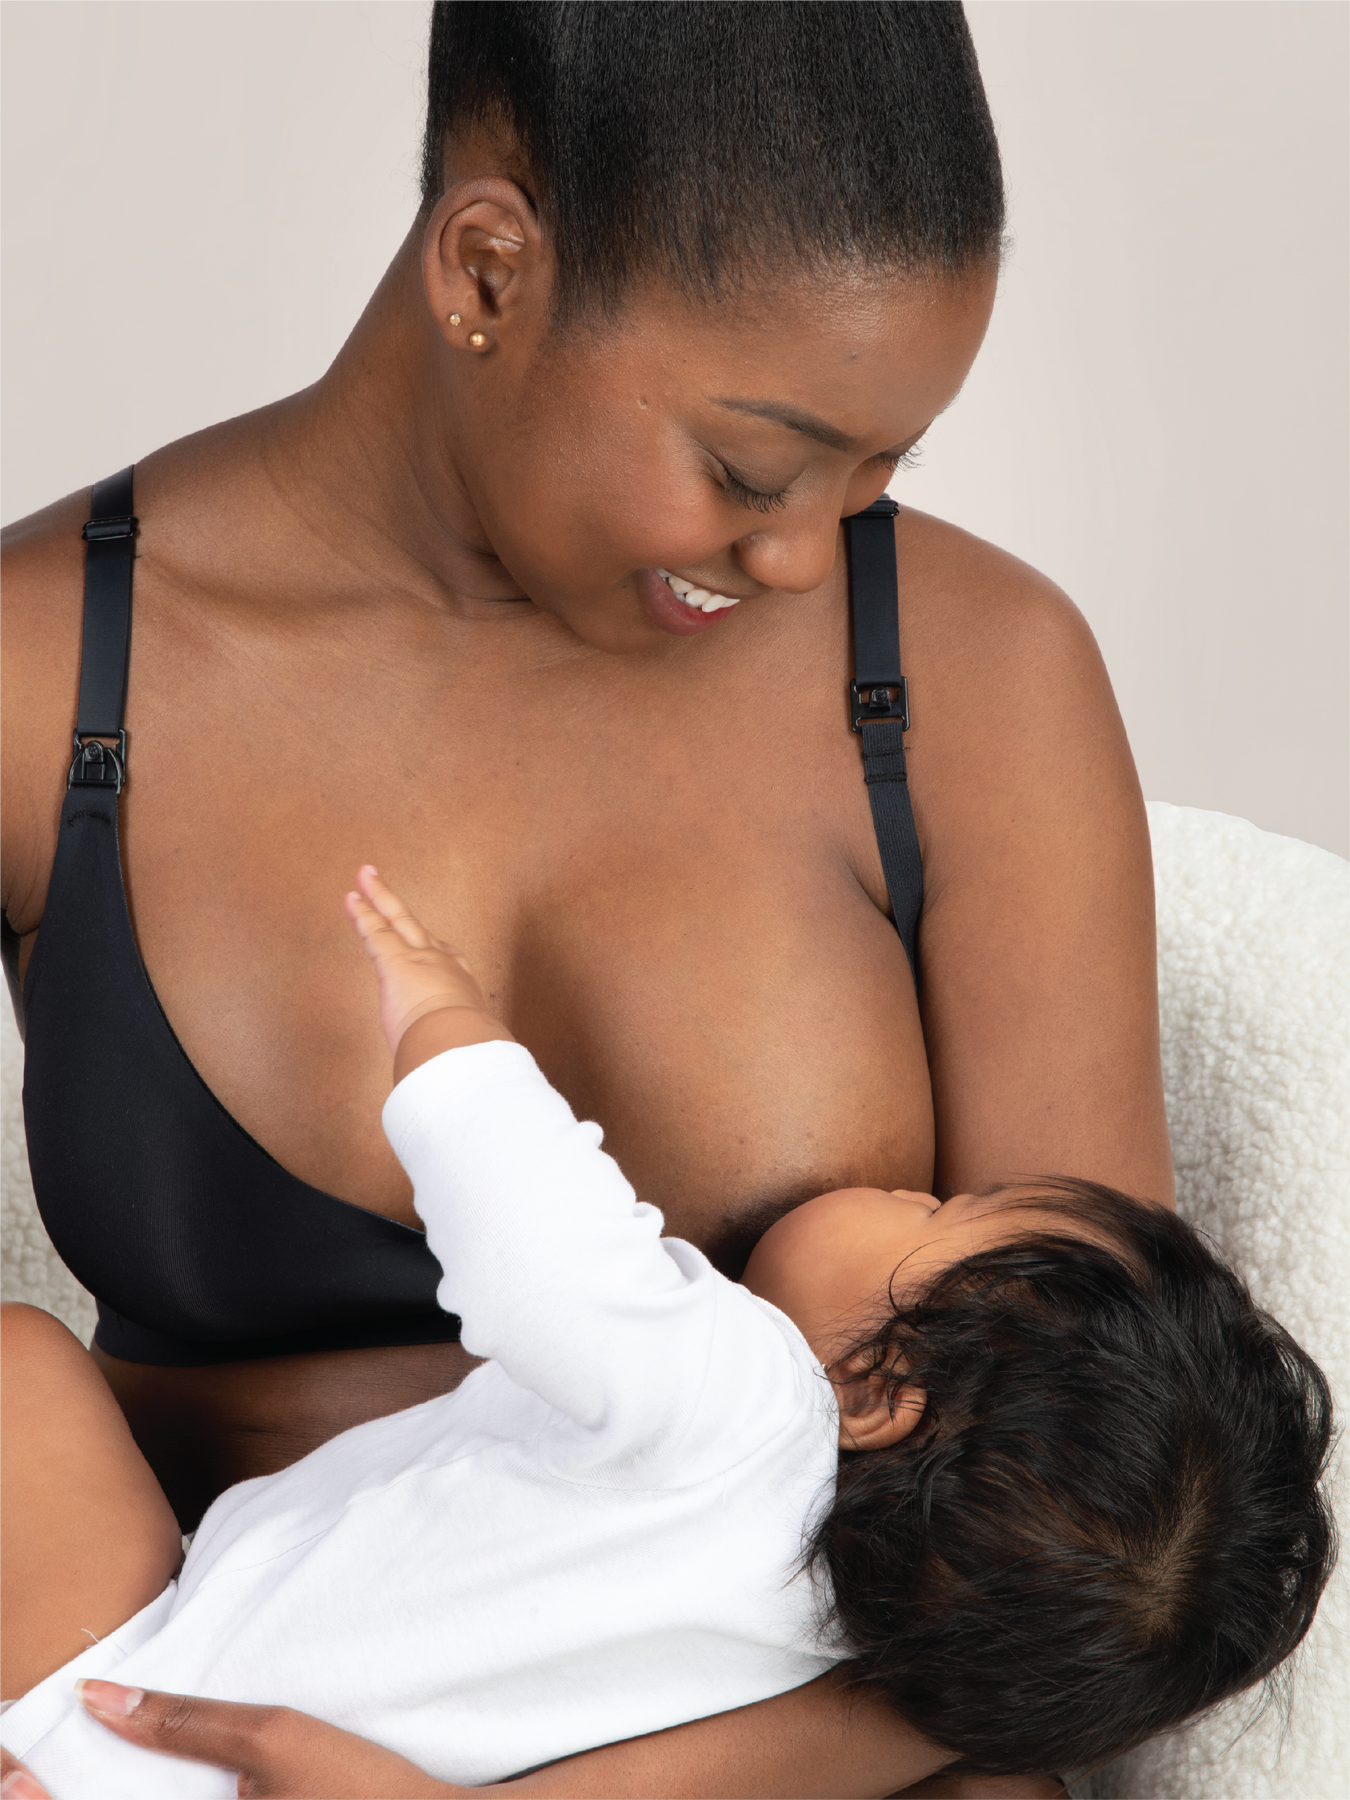 The Best New Nursing Bras Today: Best Bras for Breasfeeding